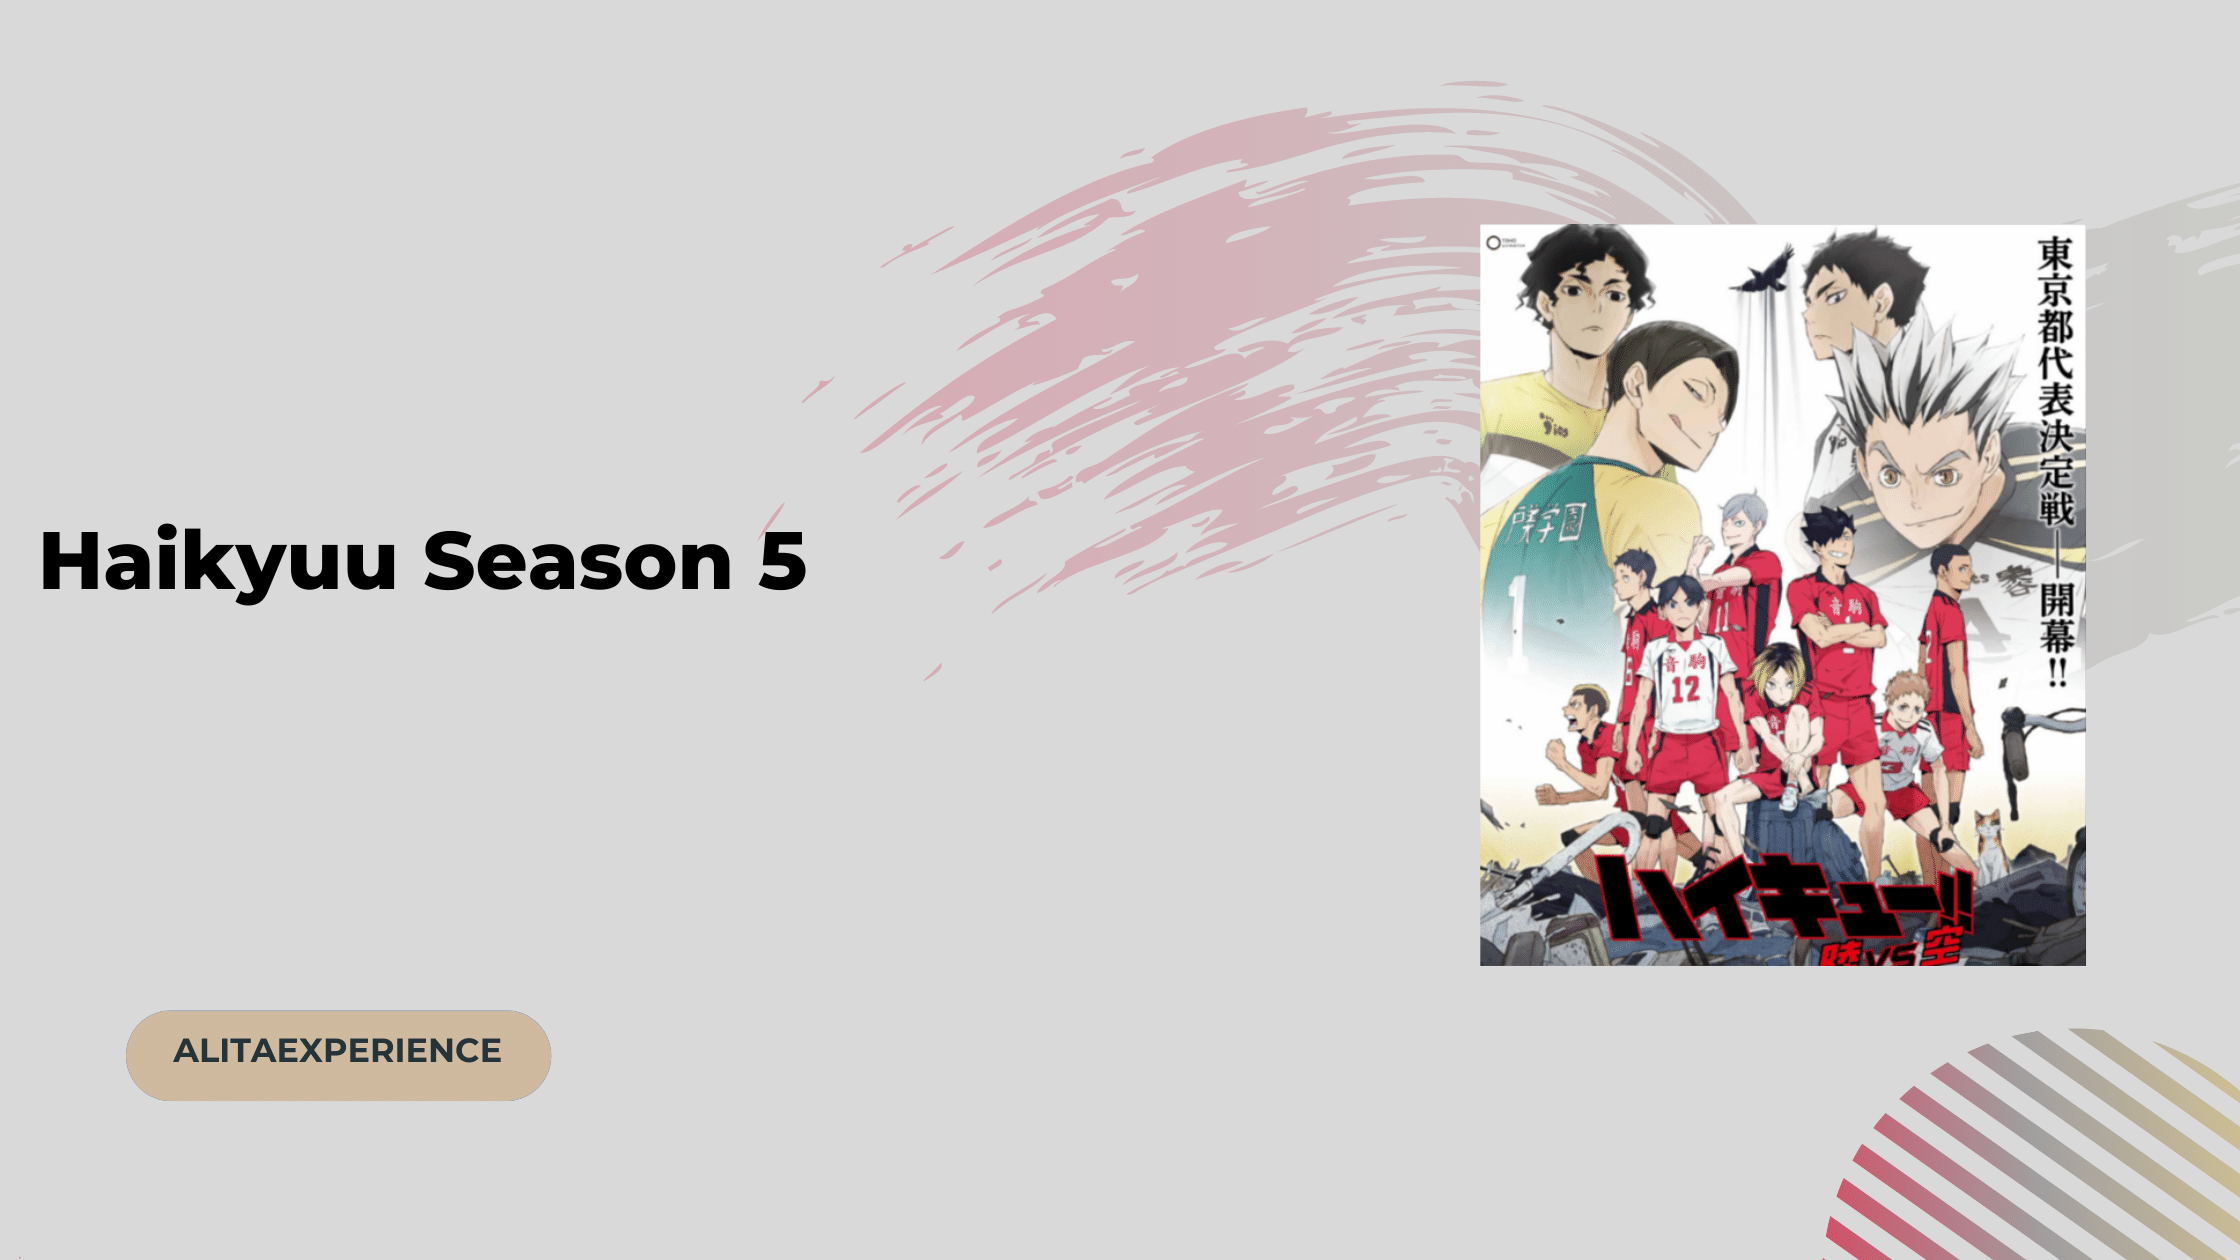 Haikyuu Season 5 - What We Know So Far